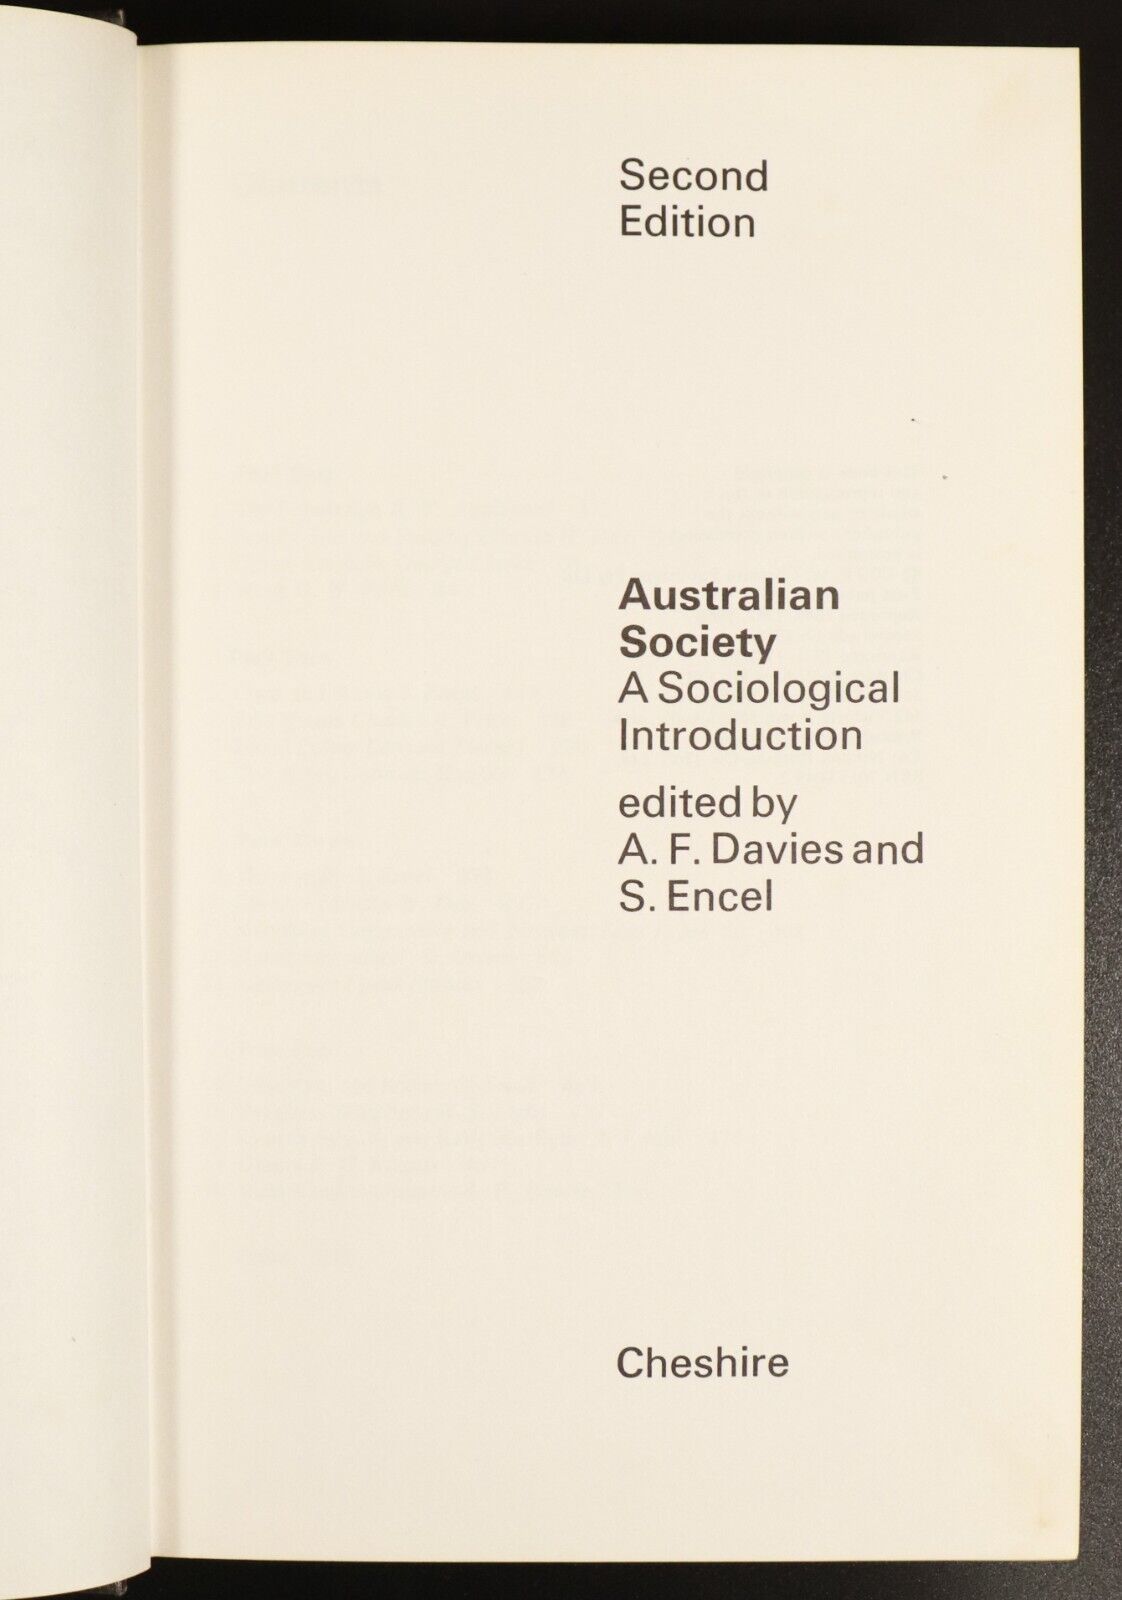 1972 Australian Society Sociological Introduction Australian History Book - 0